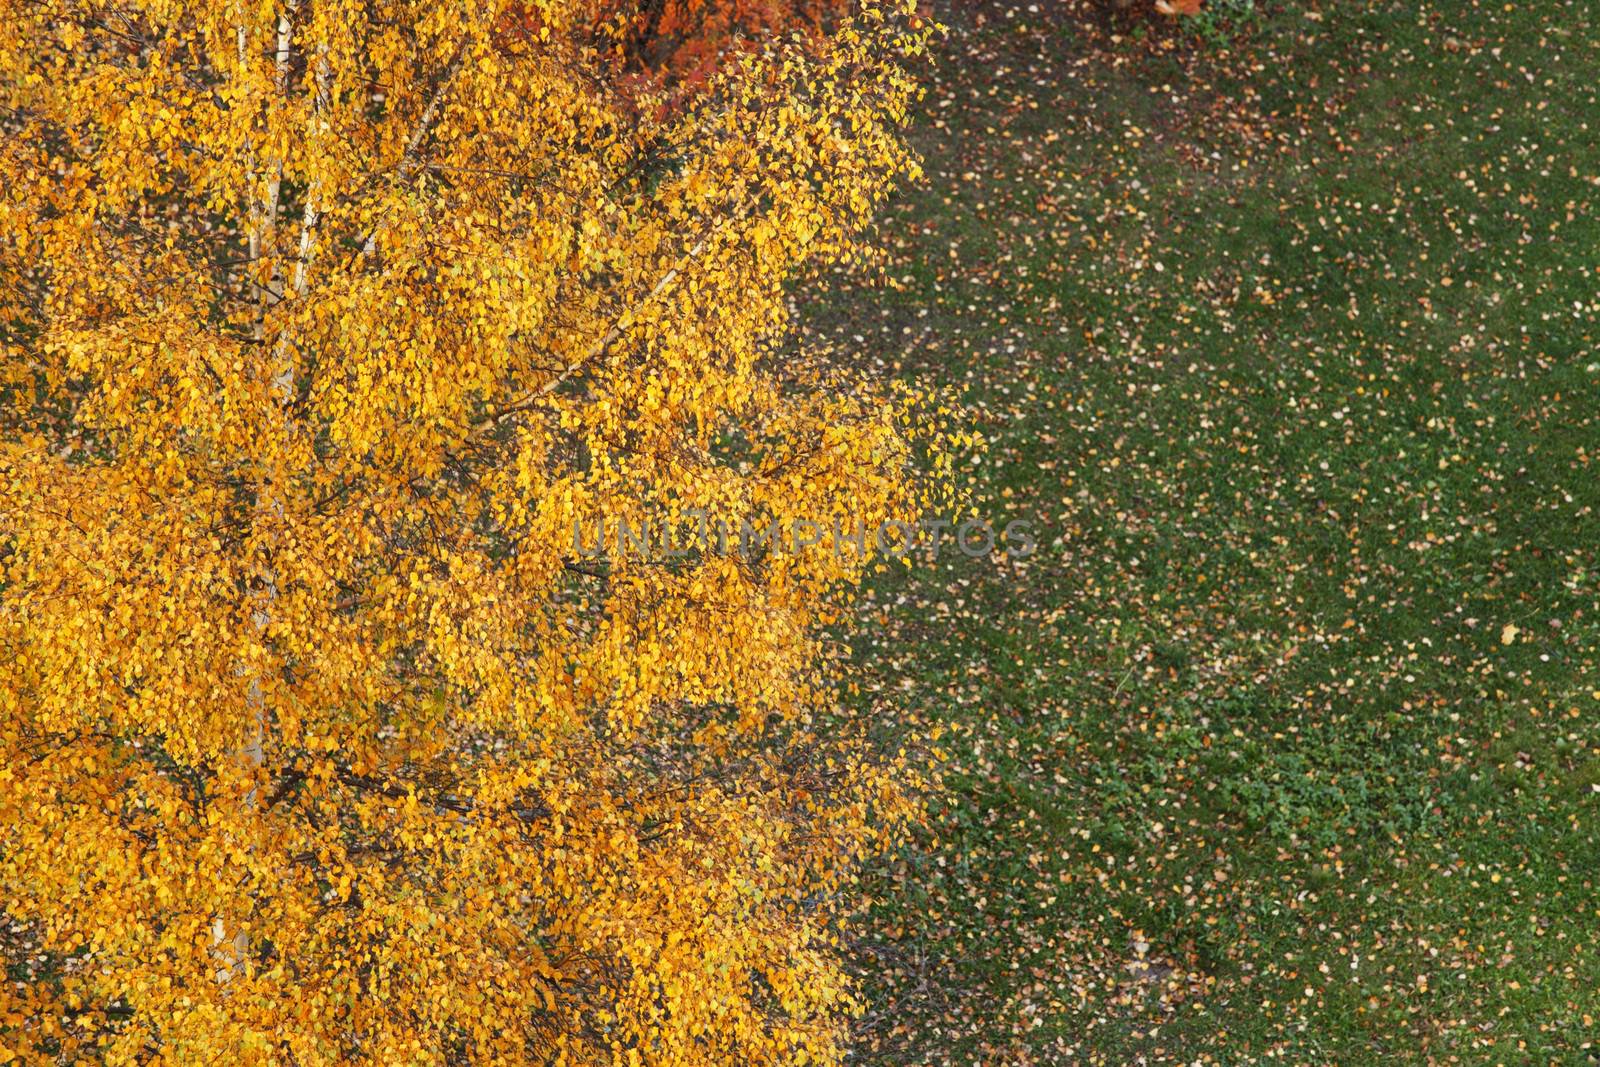 Autumn tree by Yellowj